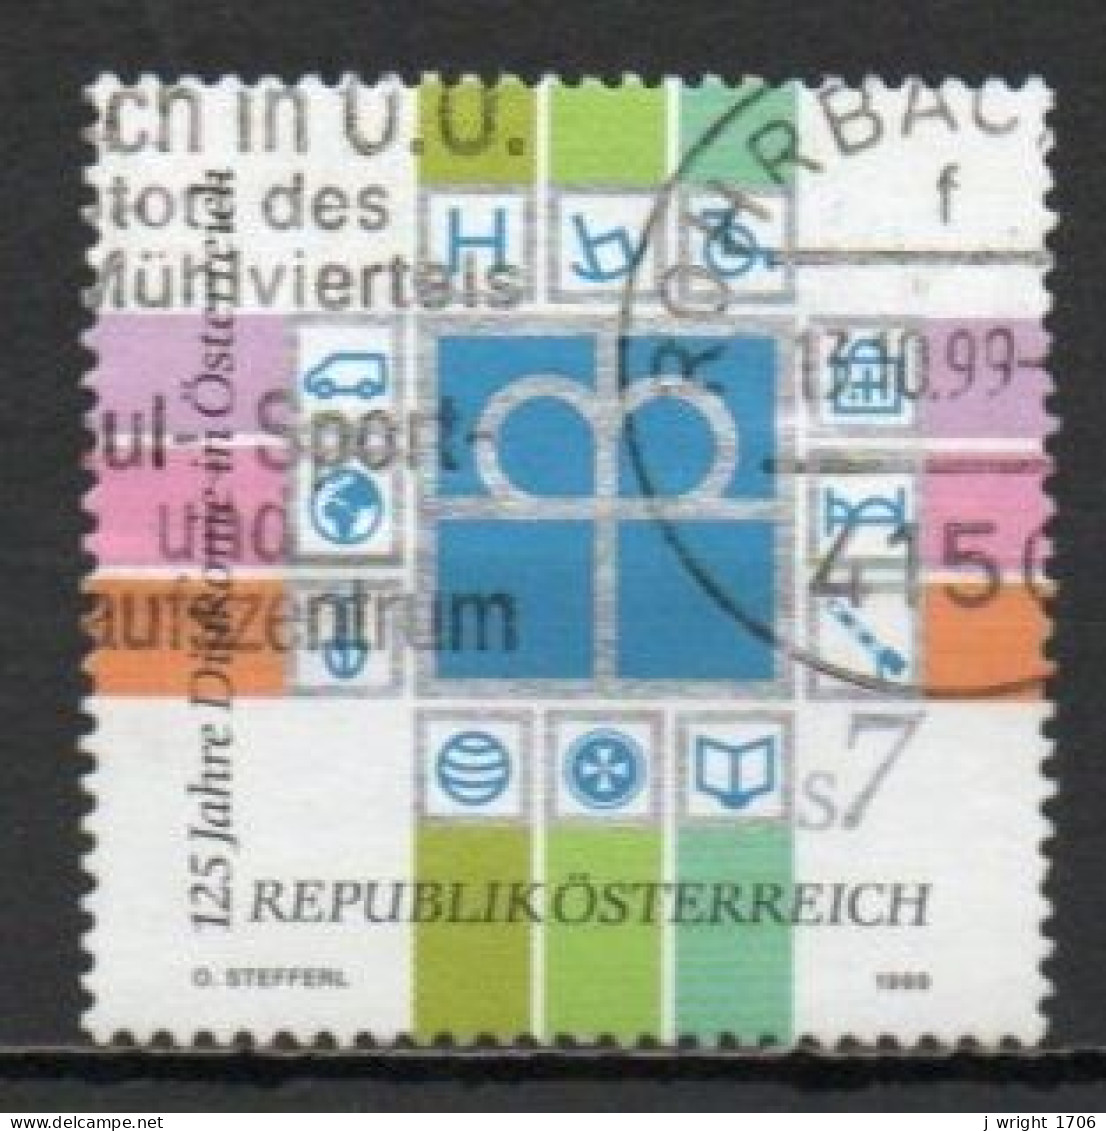 Austria, 1999, Diakonie 125th Anniv, 7s, USED - Used Stamps